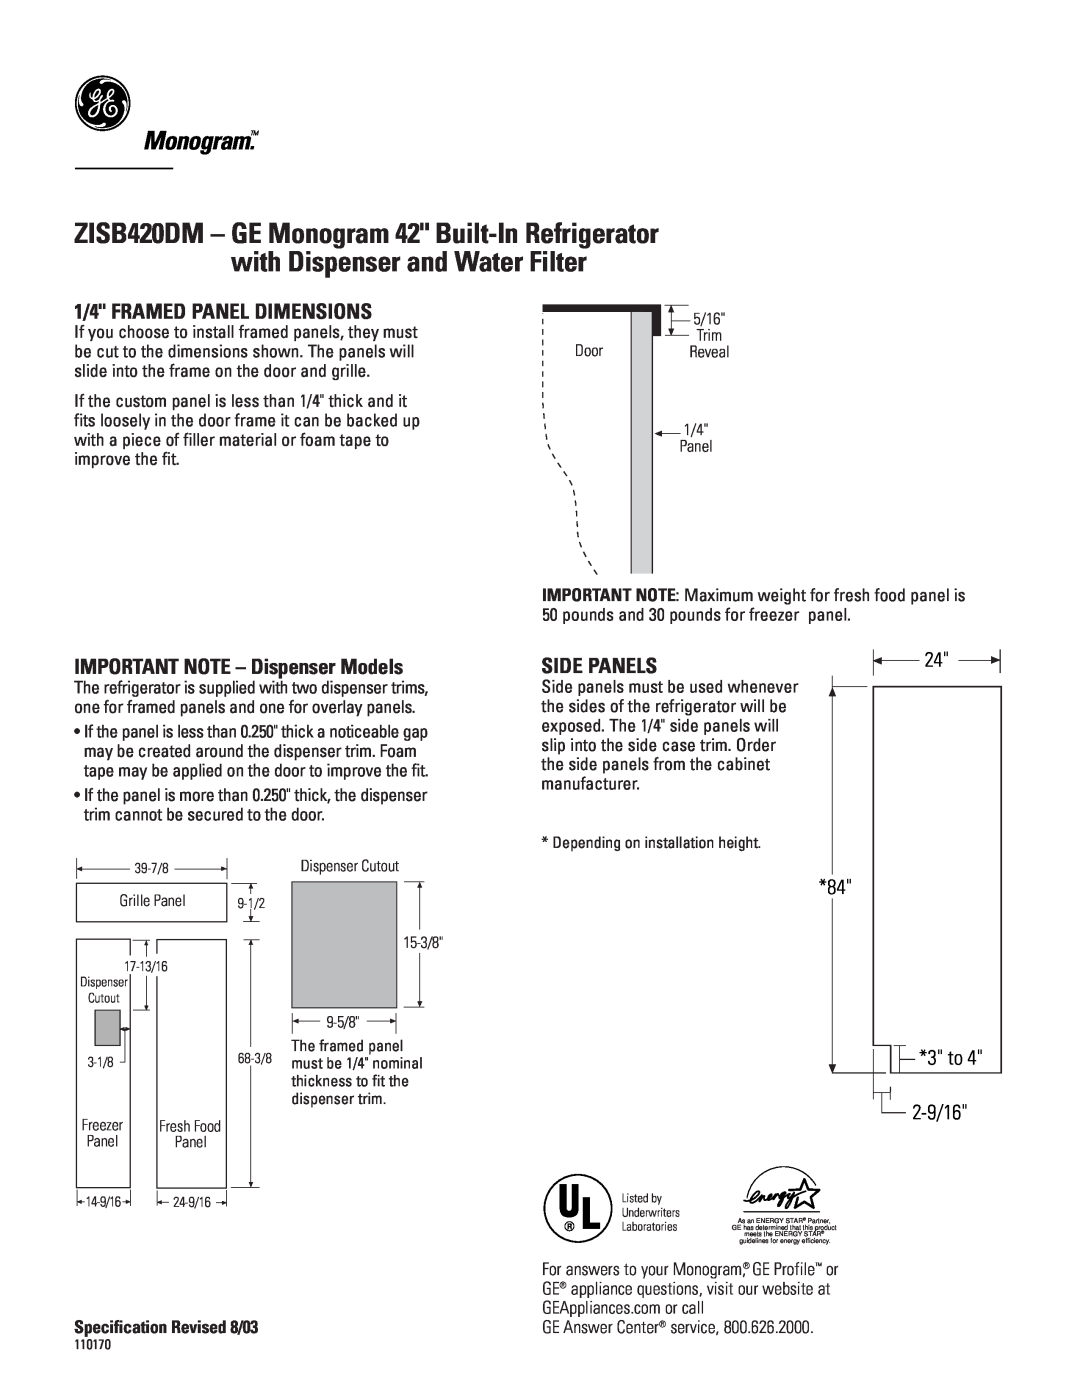 GE Monogram ZISB420DM Monogram, 1/4 FRAMED PANEL DIMENSIONS, IMPORTANT NOTE - Dispenser Models, Side Panels, 3 to 2-9/16 